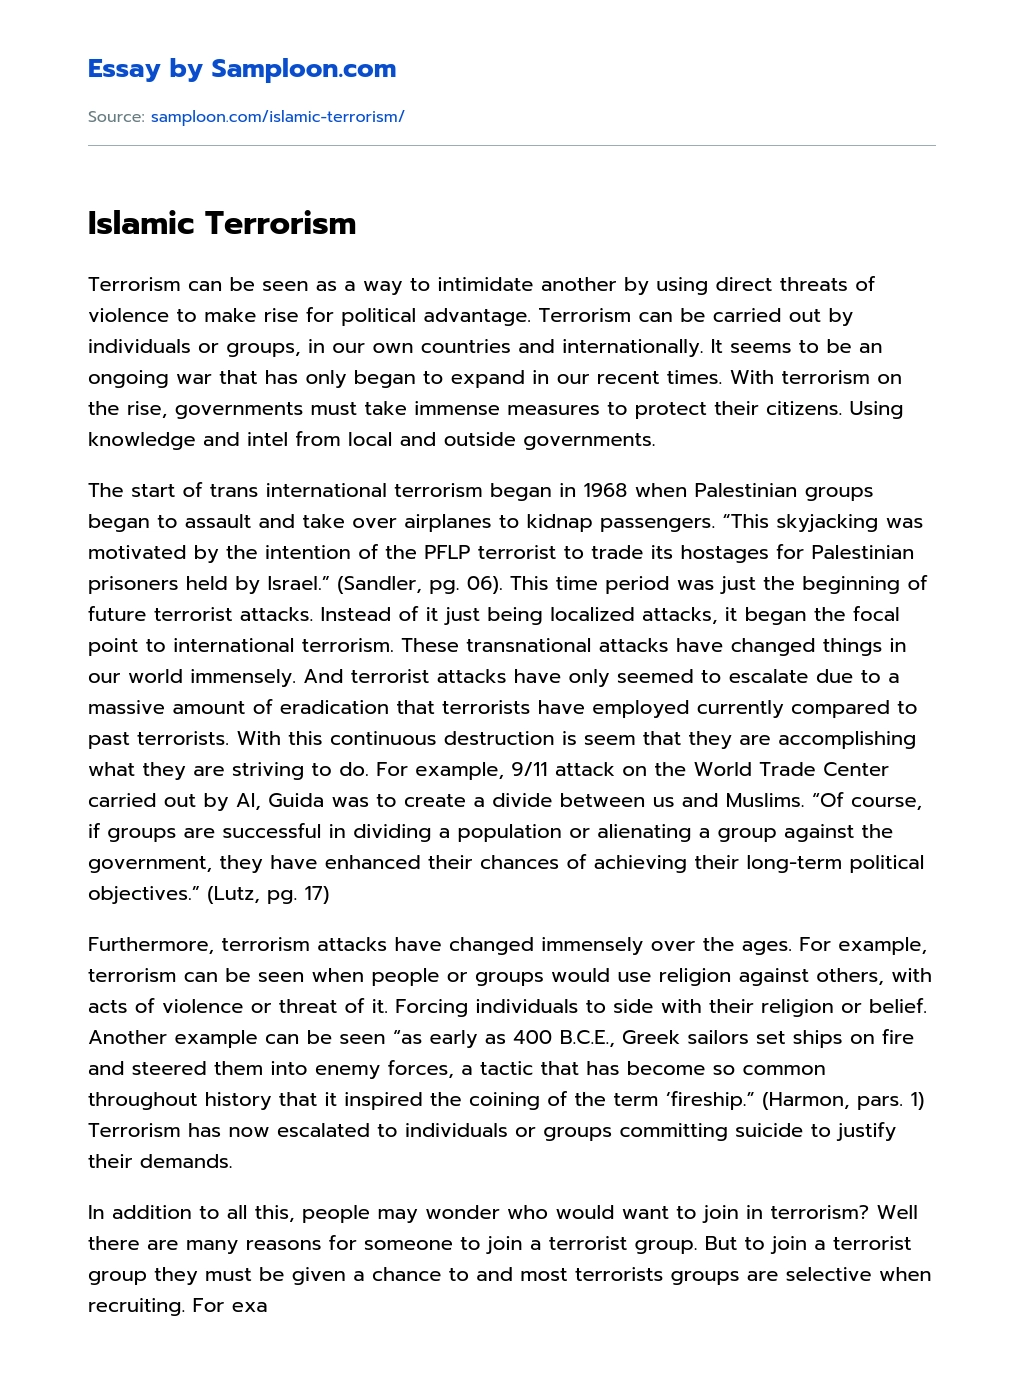 Islamic Terrorism essay